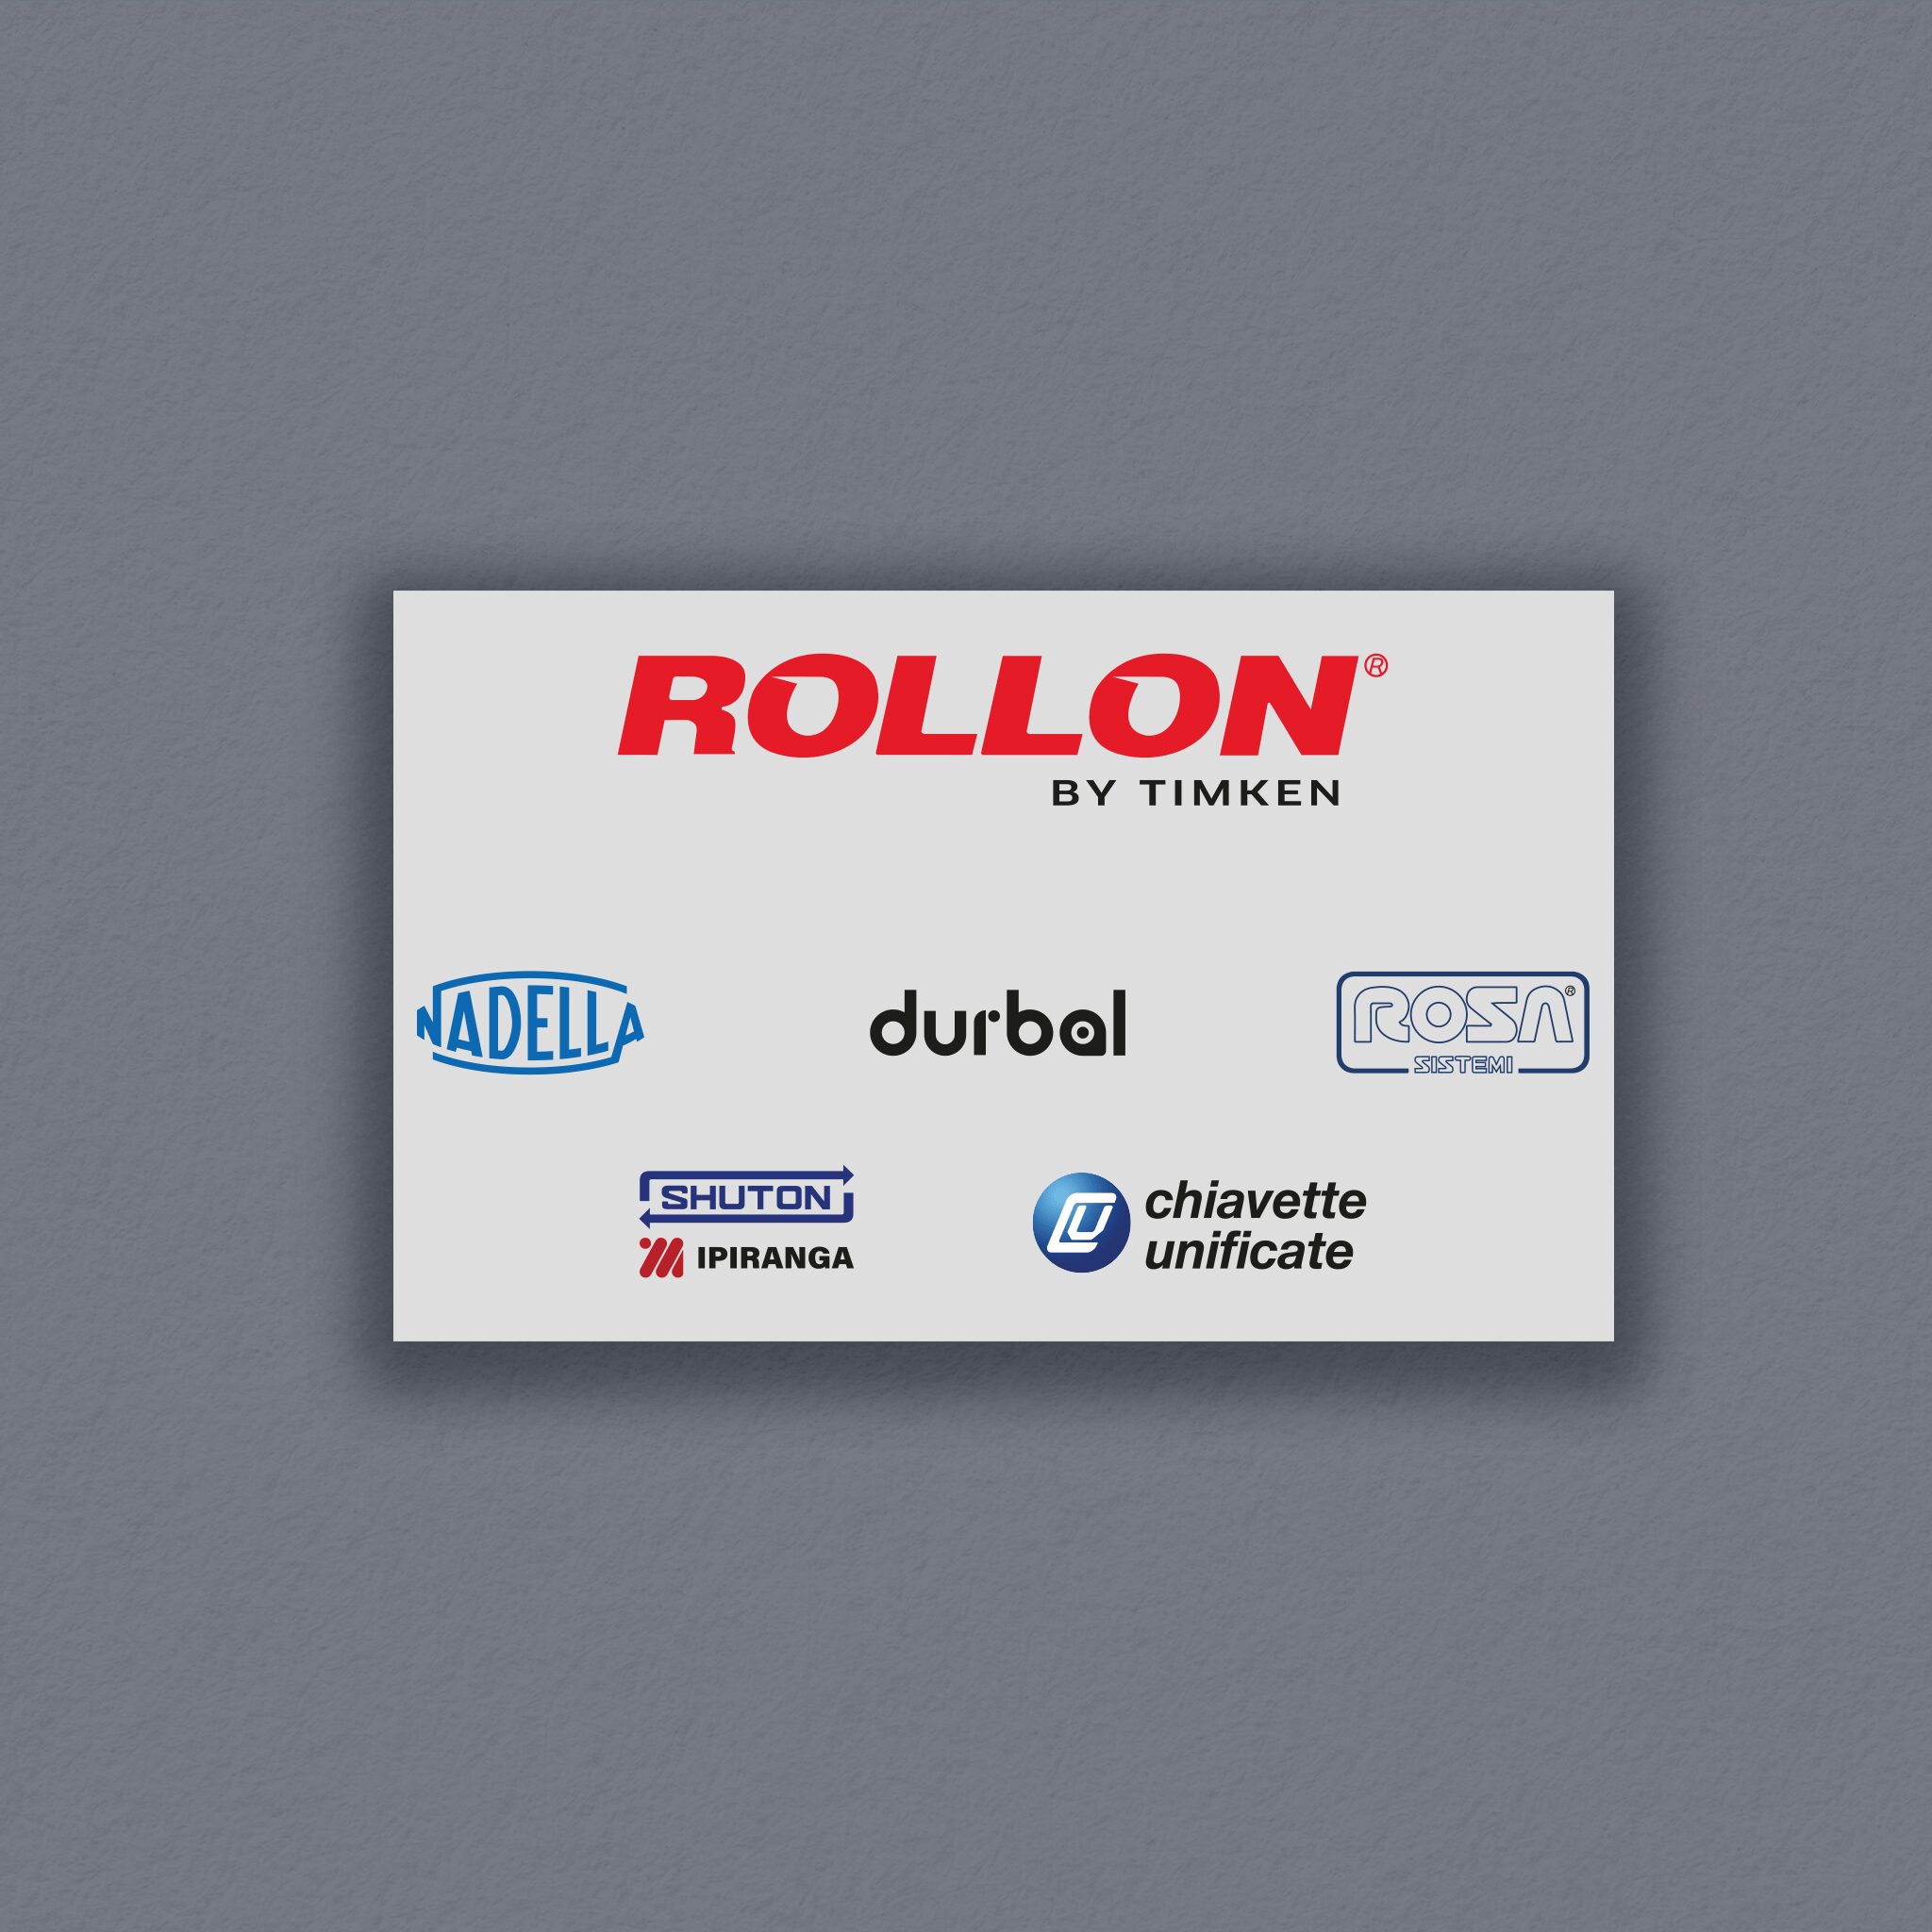 Rollon Presents its New Comprehensive Product Portfolio